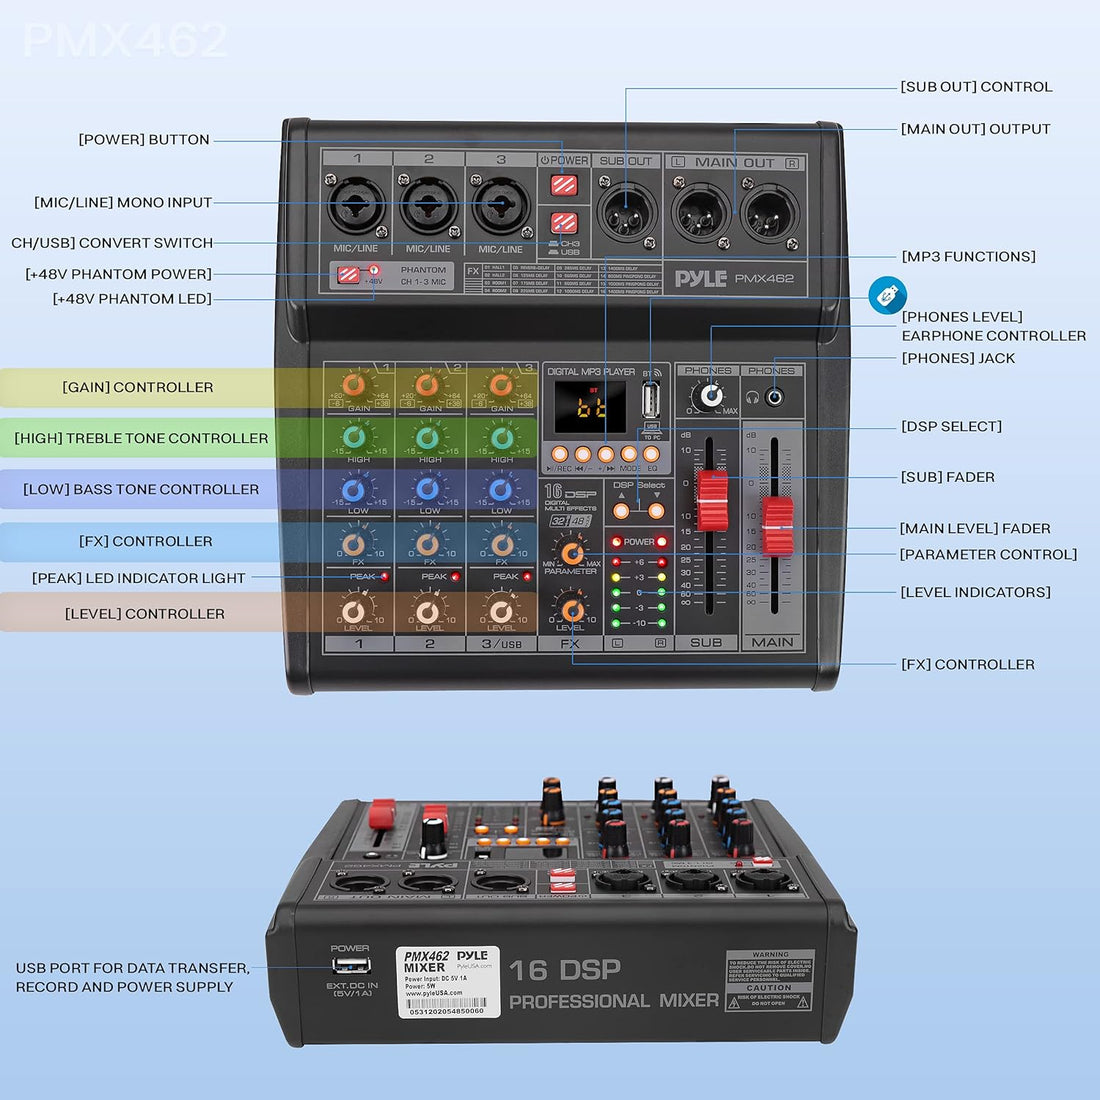 Professional DJ Audio Mixer Controller - 3-Channel DJ Controller Sound Mixer w/ DSP 16 Preset Effects, USB Interface, 3 Mic/Line Input, Built-in FX Processor MP3 Player, Headphone Jack - Pyle PMX462